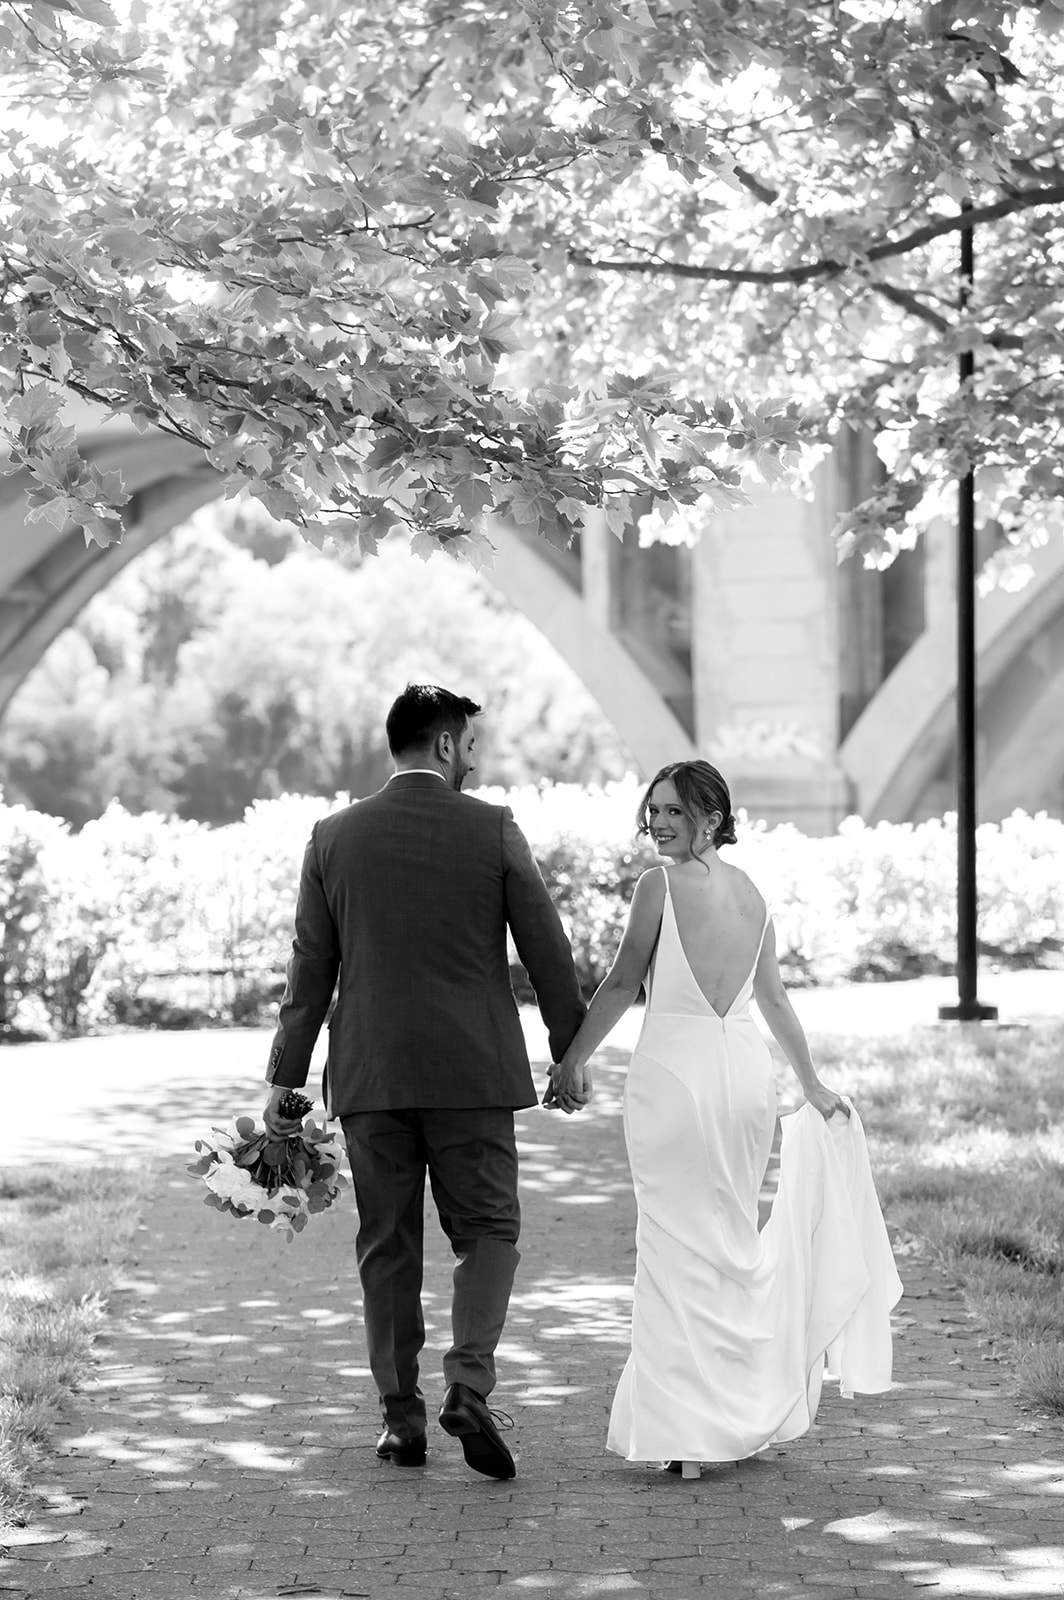 Potomac View Terrace Wedding, Potomac View Terrace Wedding Photos, Washington DC Wedding Photographer, Alexandra Kent Photography